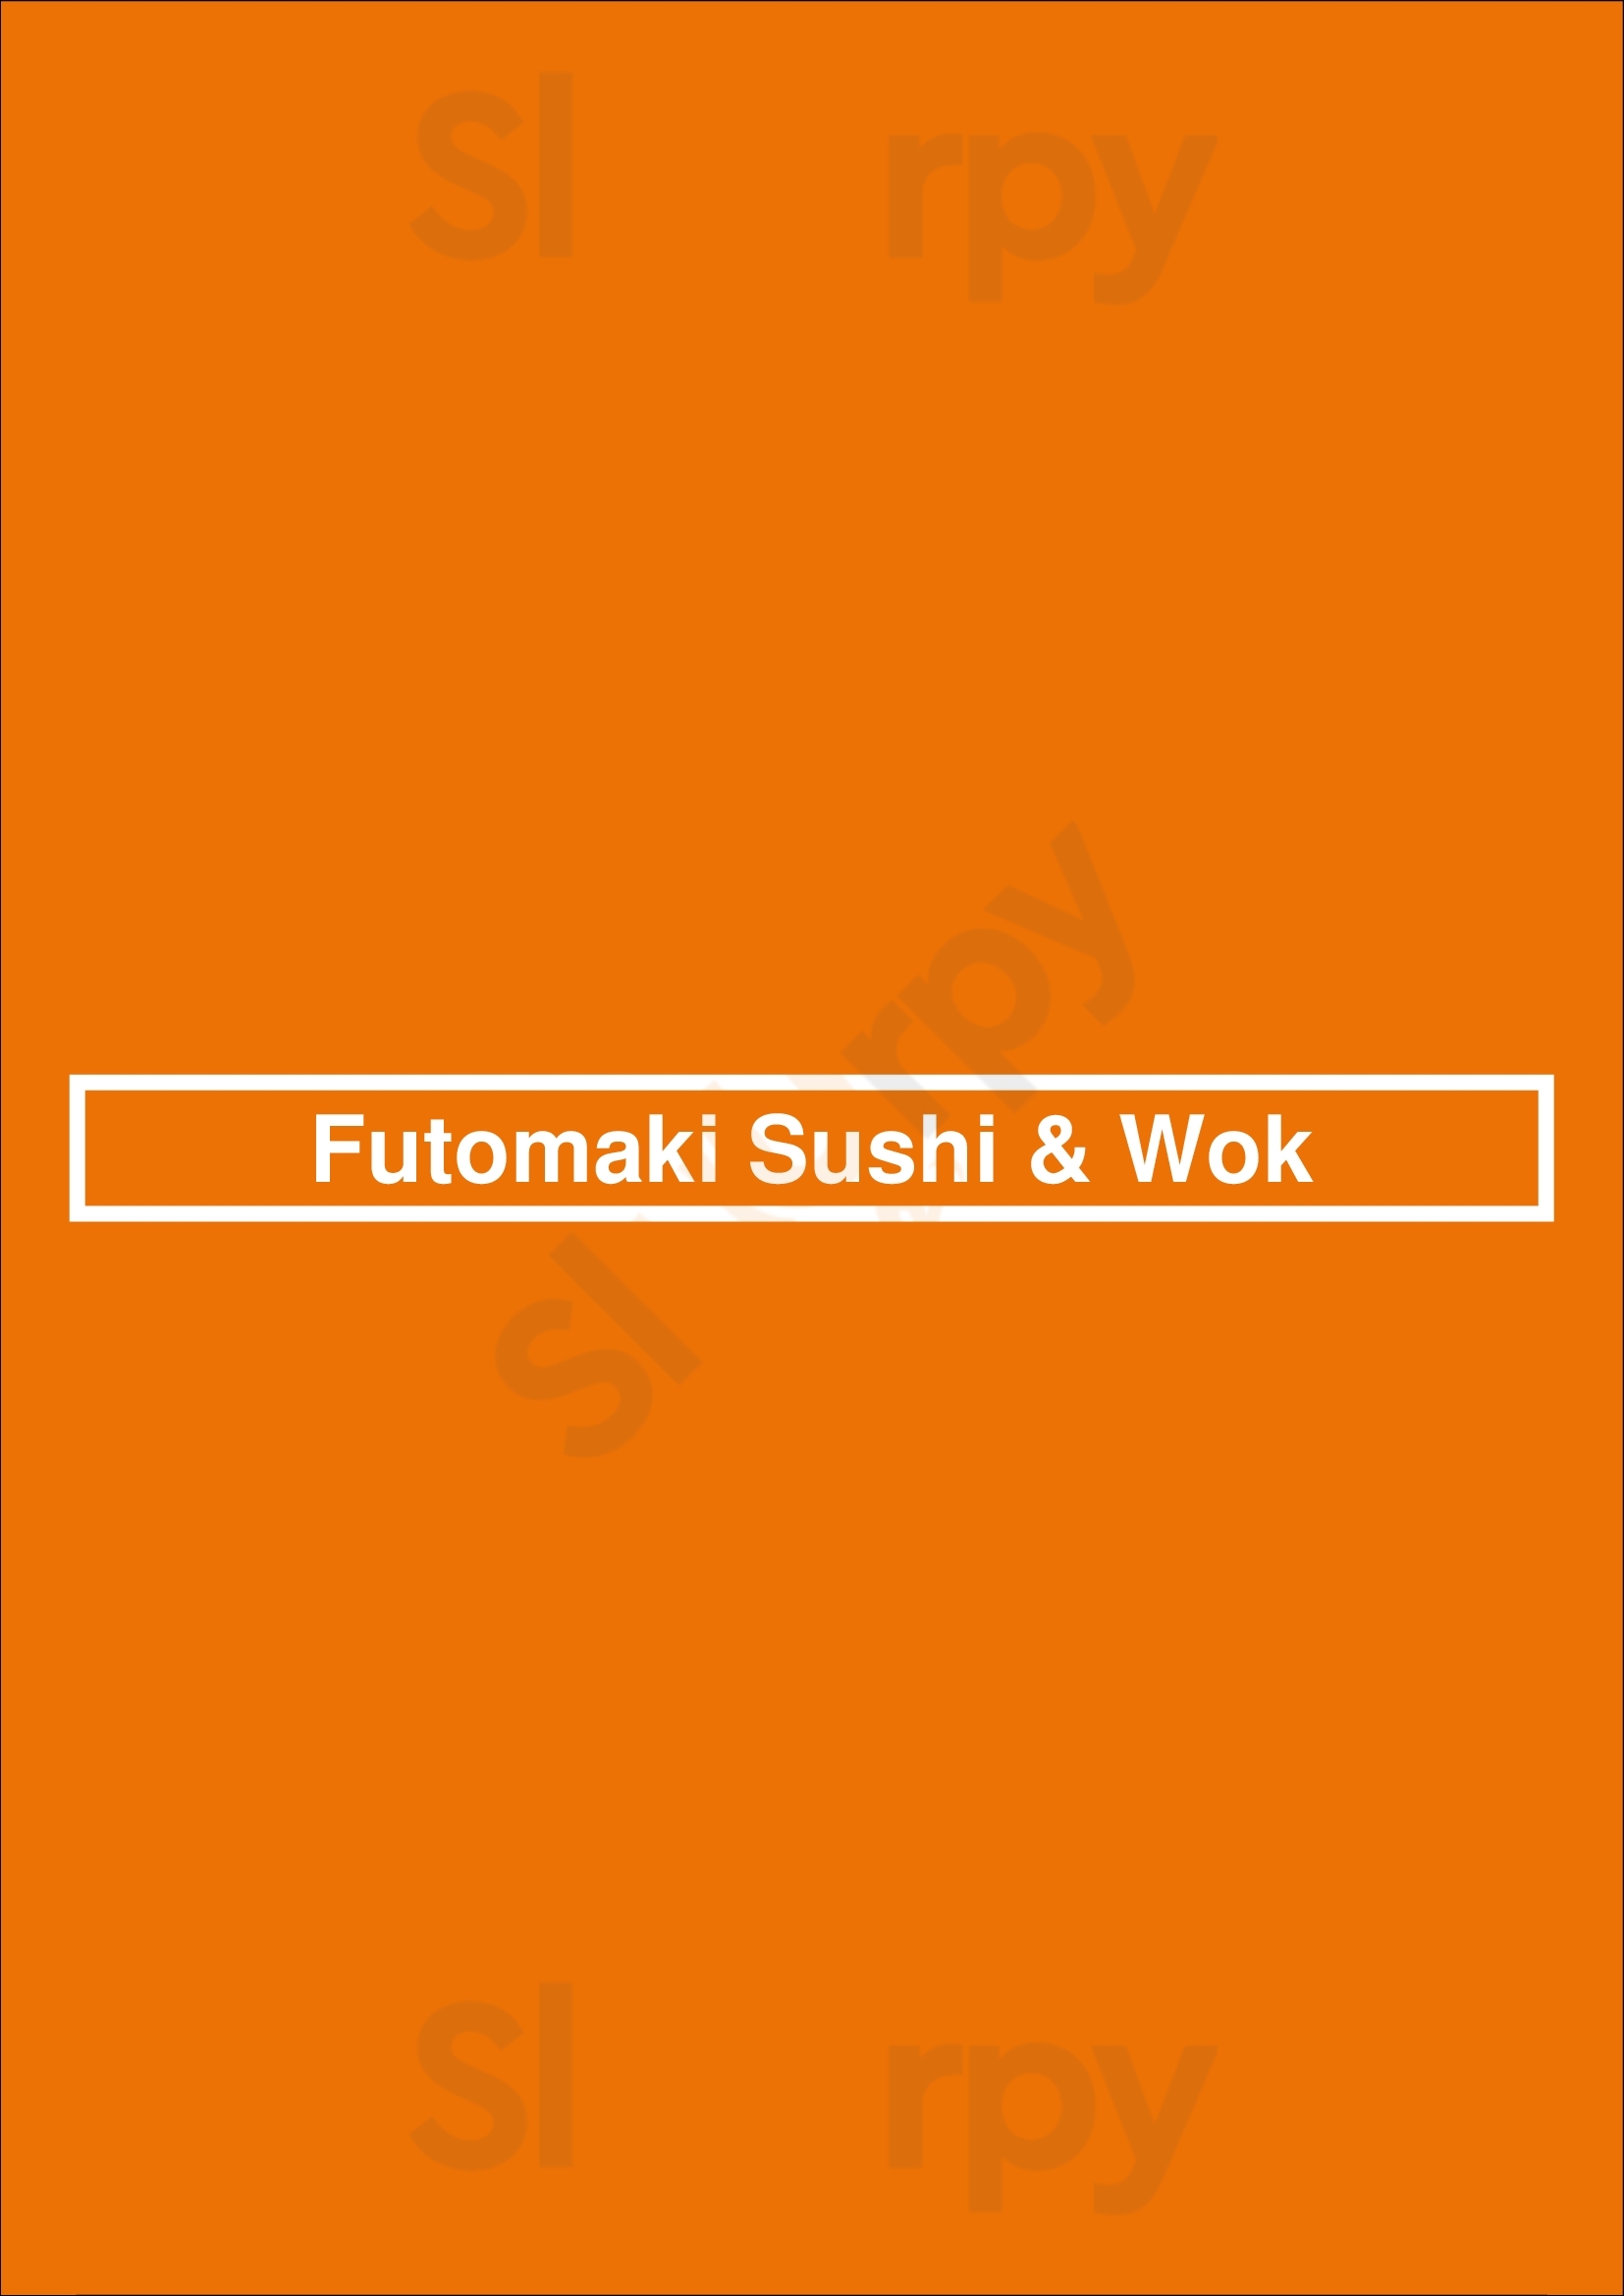 Futomaki Sushi & Wok Buenos Aires Menu - 1